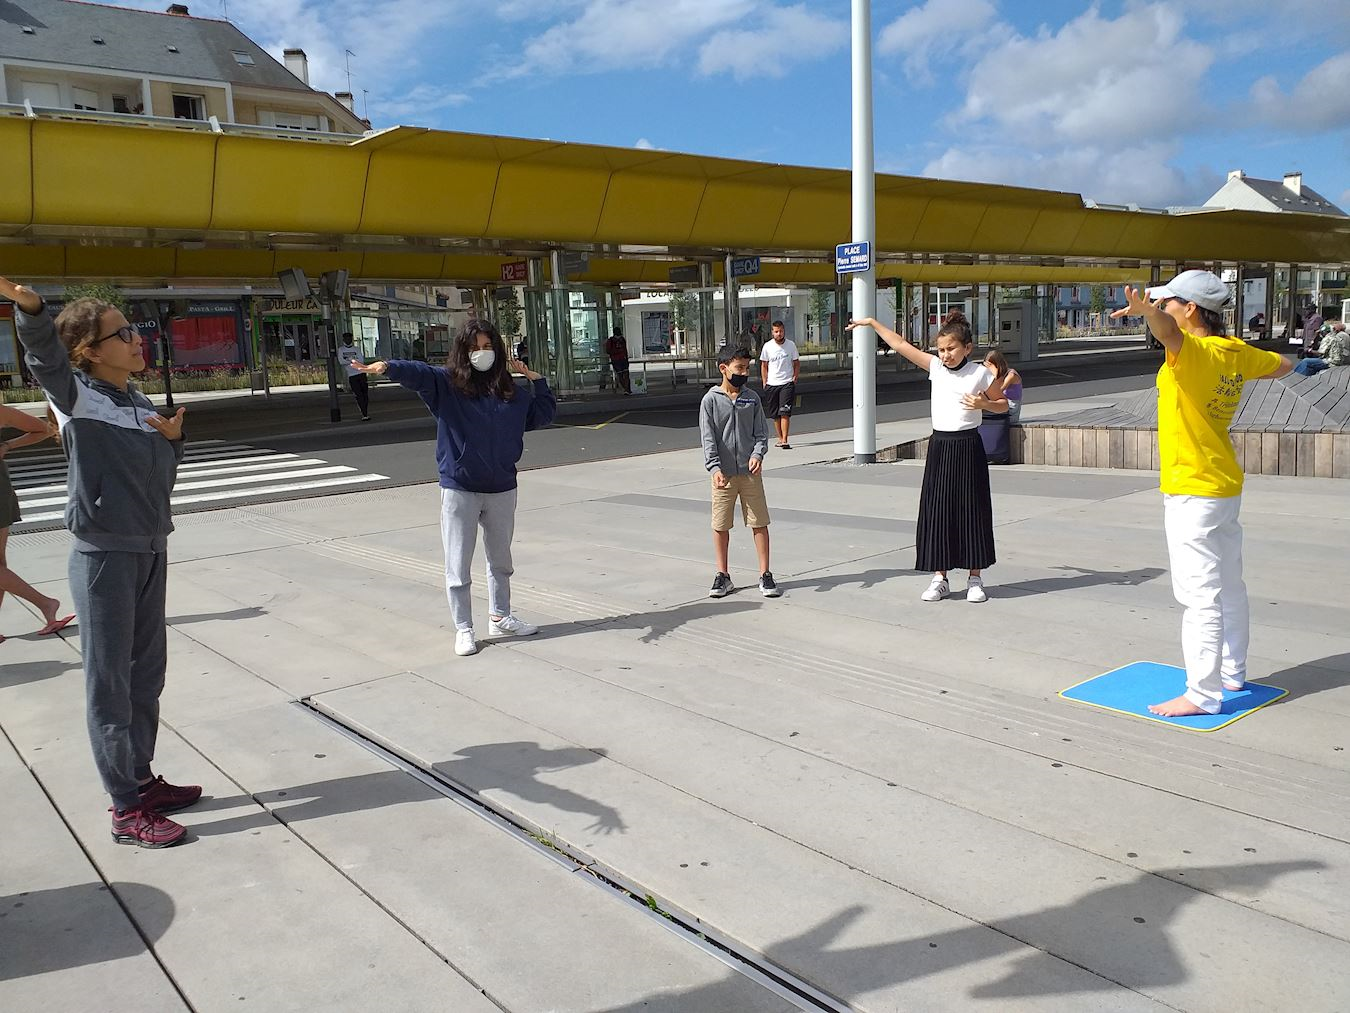 Image for article Nantes, France : Les gens condamnent la persécution du Falun Gong